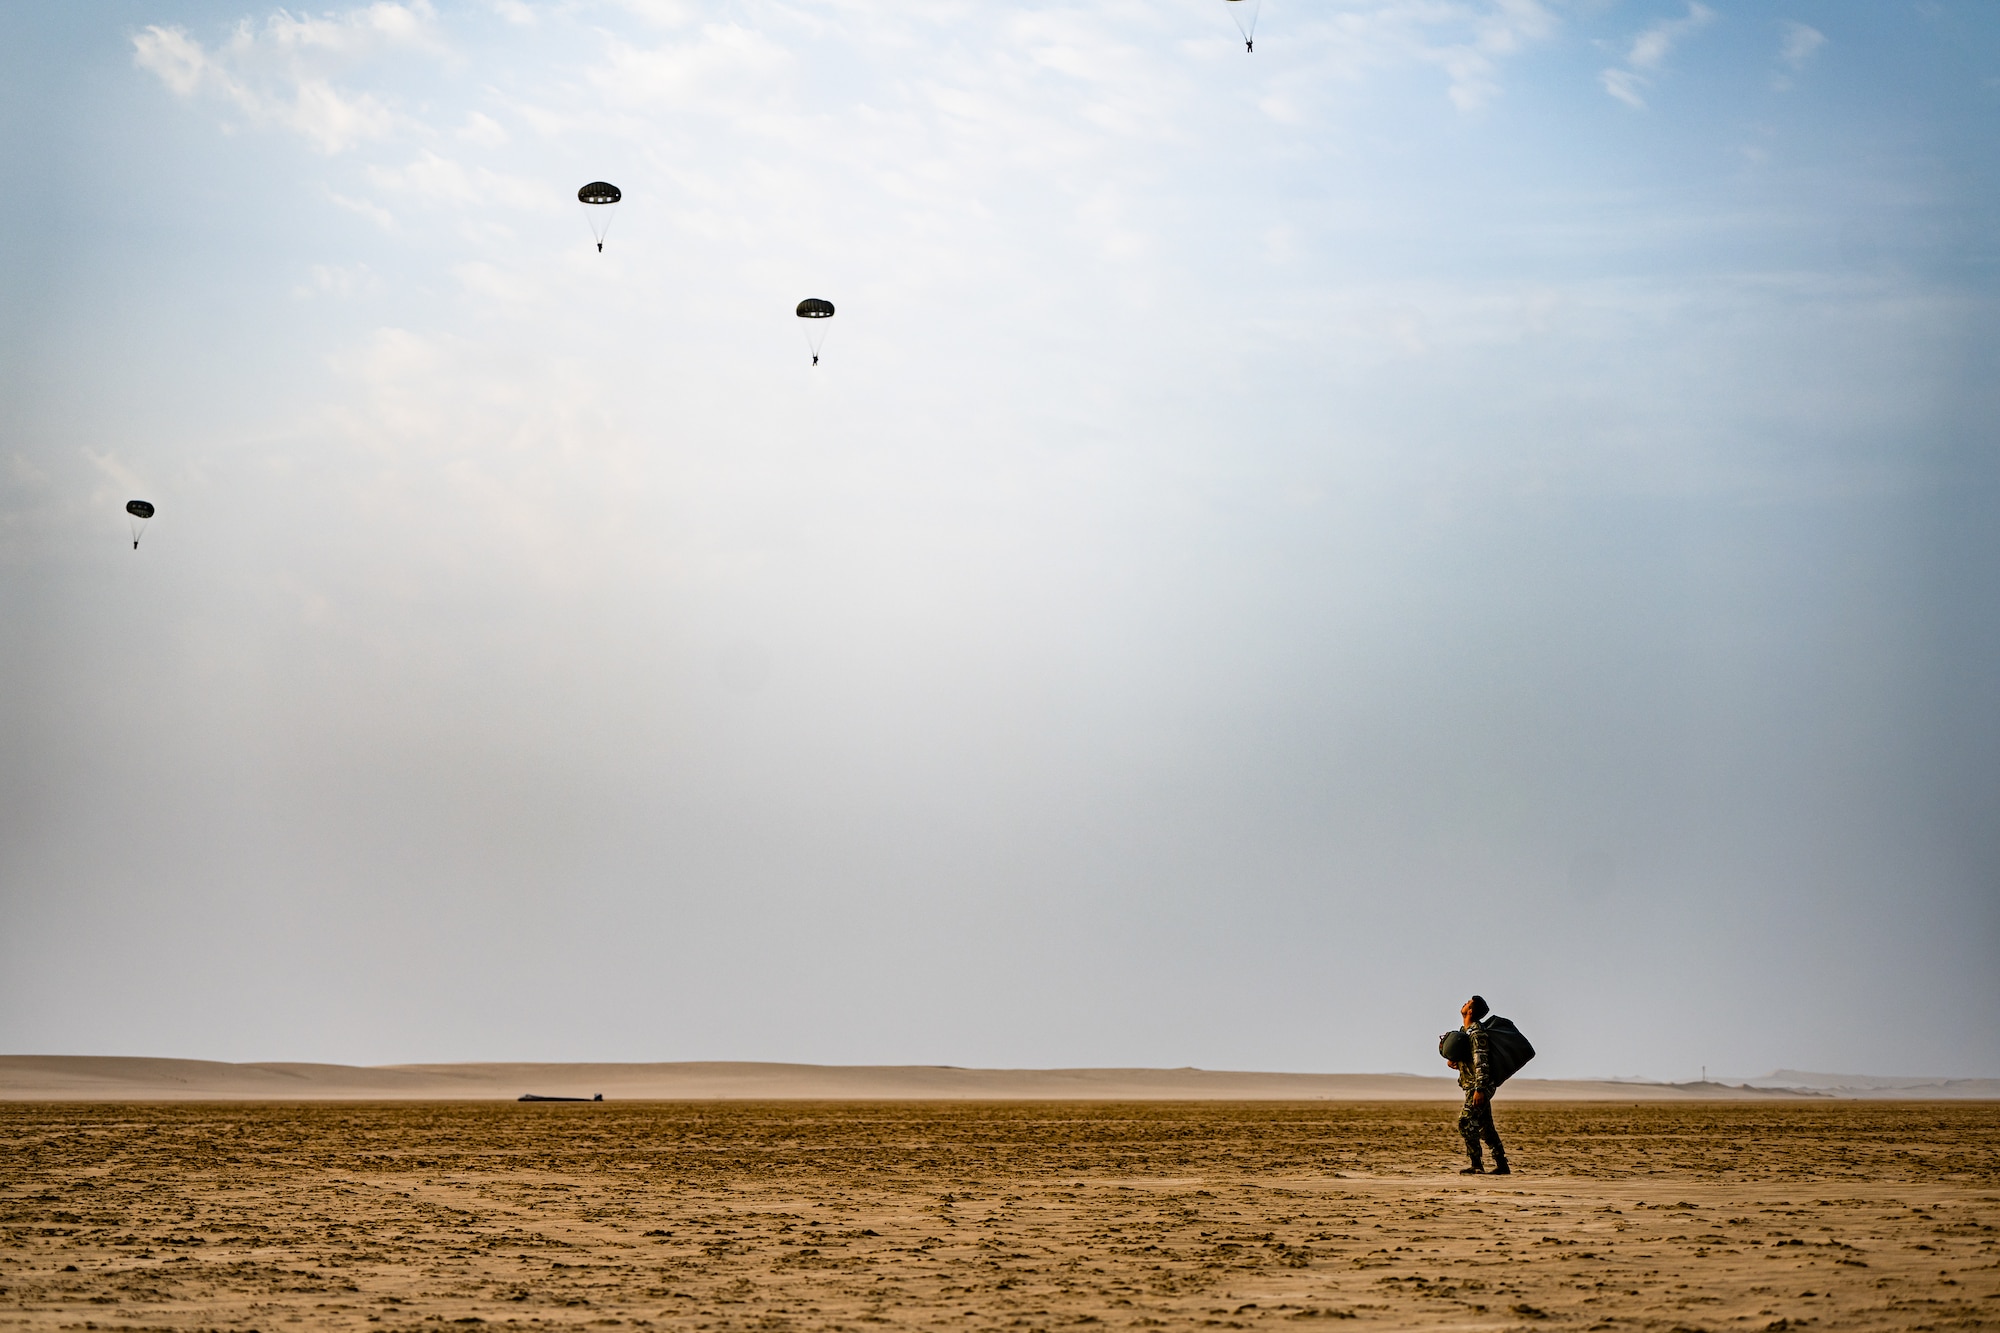 Paratroopers descending above the desert